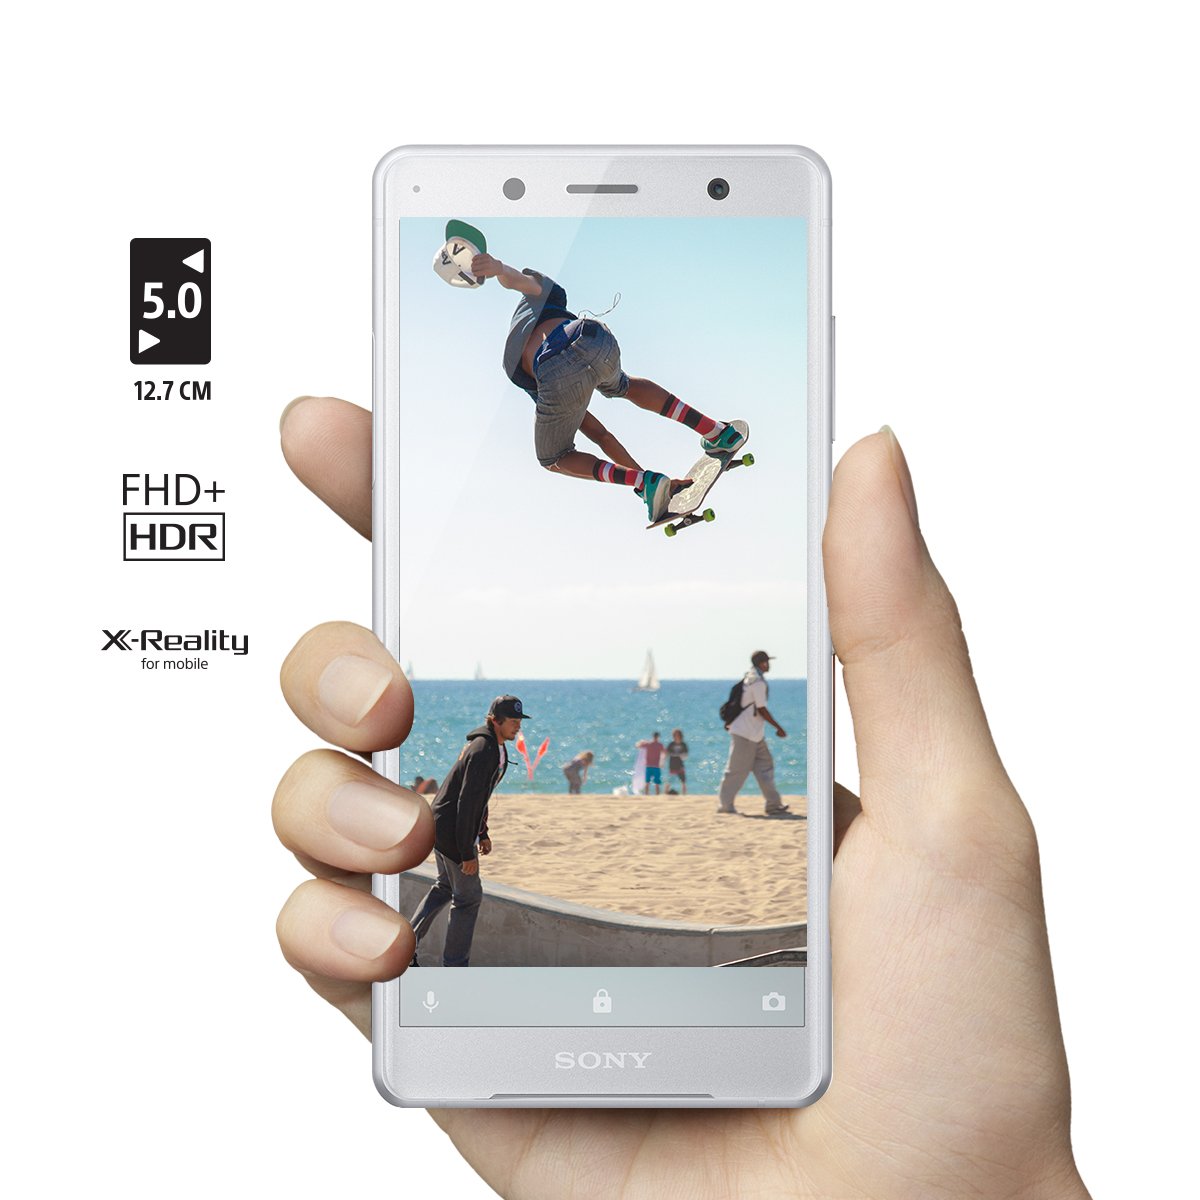 Sony Xperia XZ2 Compact Unlocked Smartphone - 5" Screen - 64GB - White Silver (US Warranty)